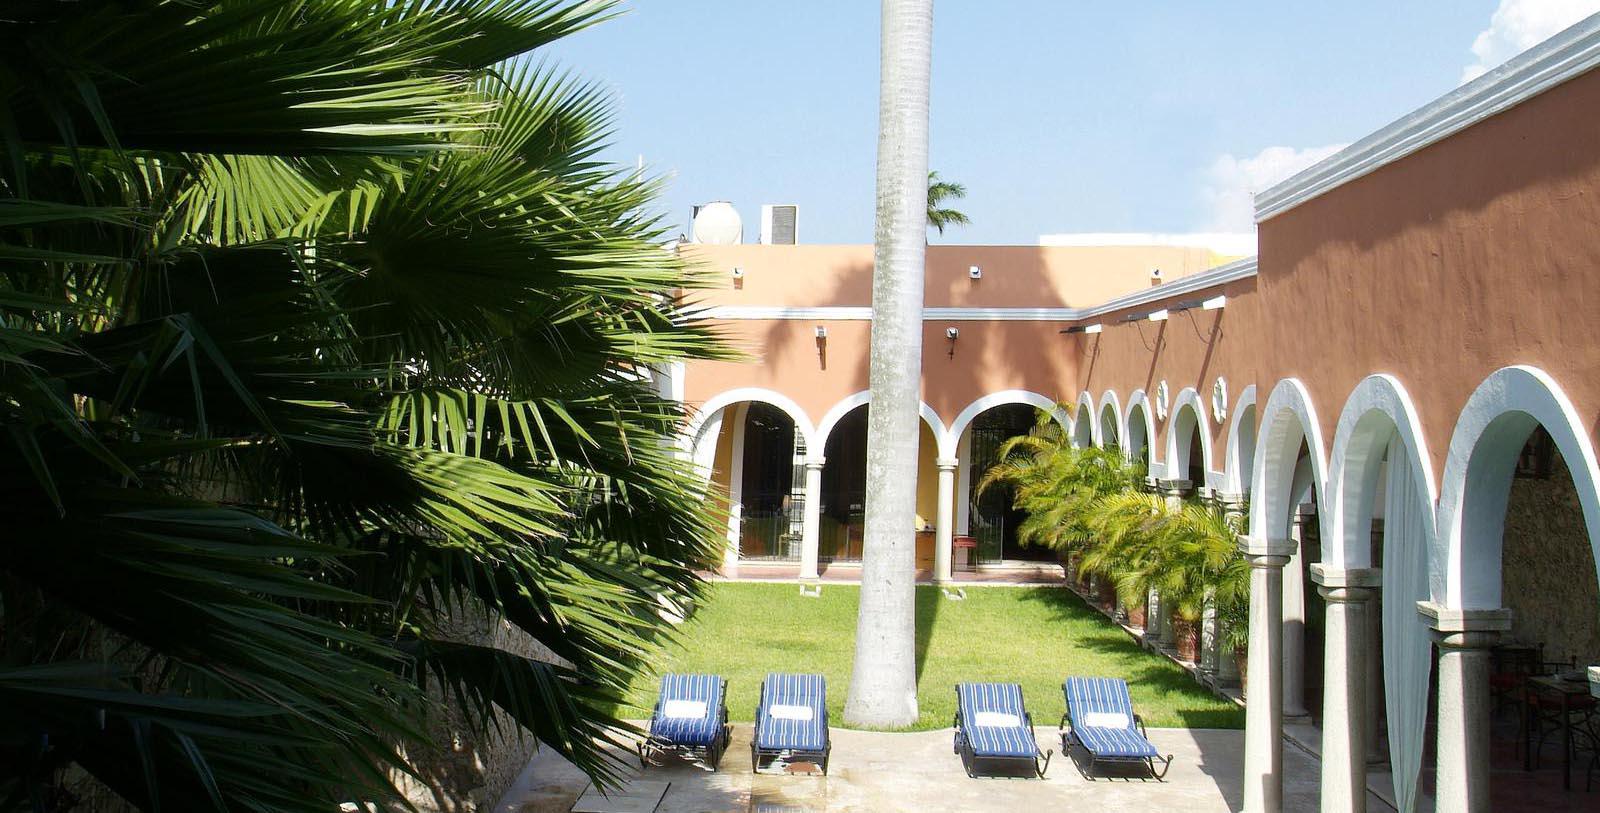 Image of Lobby, Hotel Hacienda Merida, Mexico, 1700s, Member of Historic Hotels Worldwide, Experience